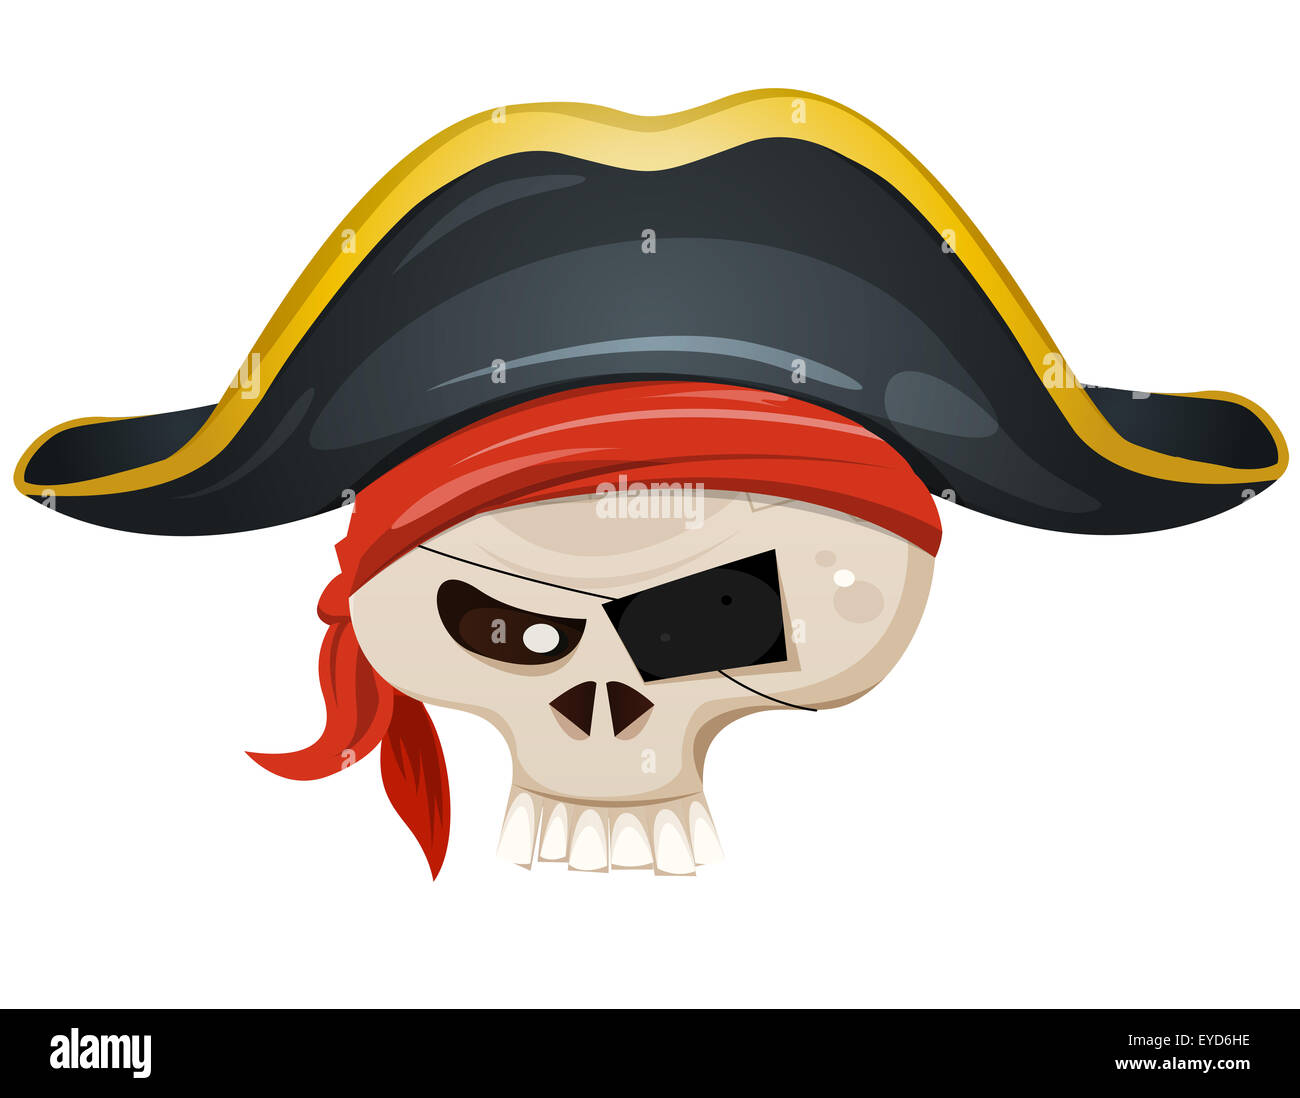 Illustration of a cartoon pirate skull head character, with bandana and corsair hat Stock Photo